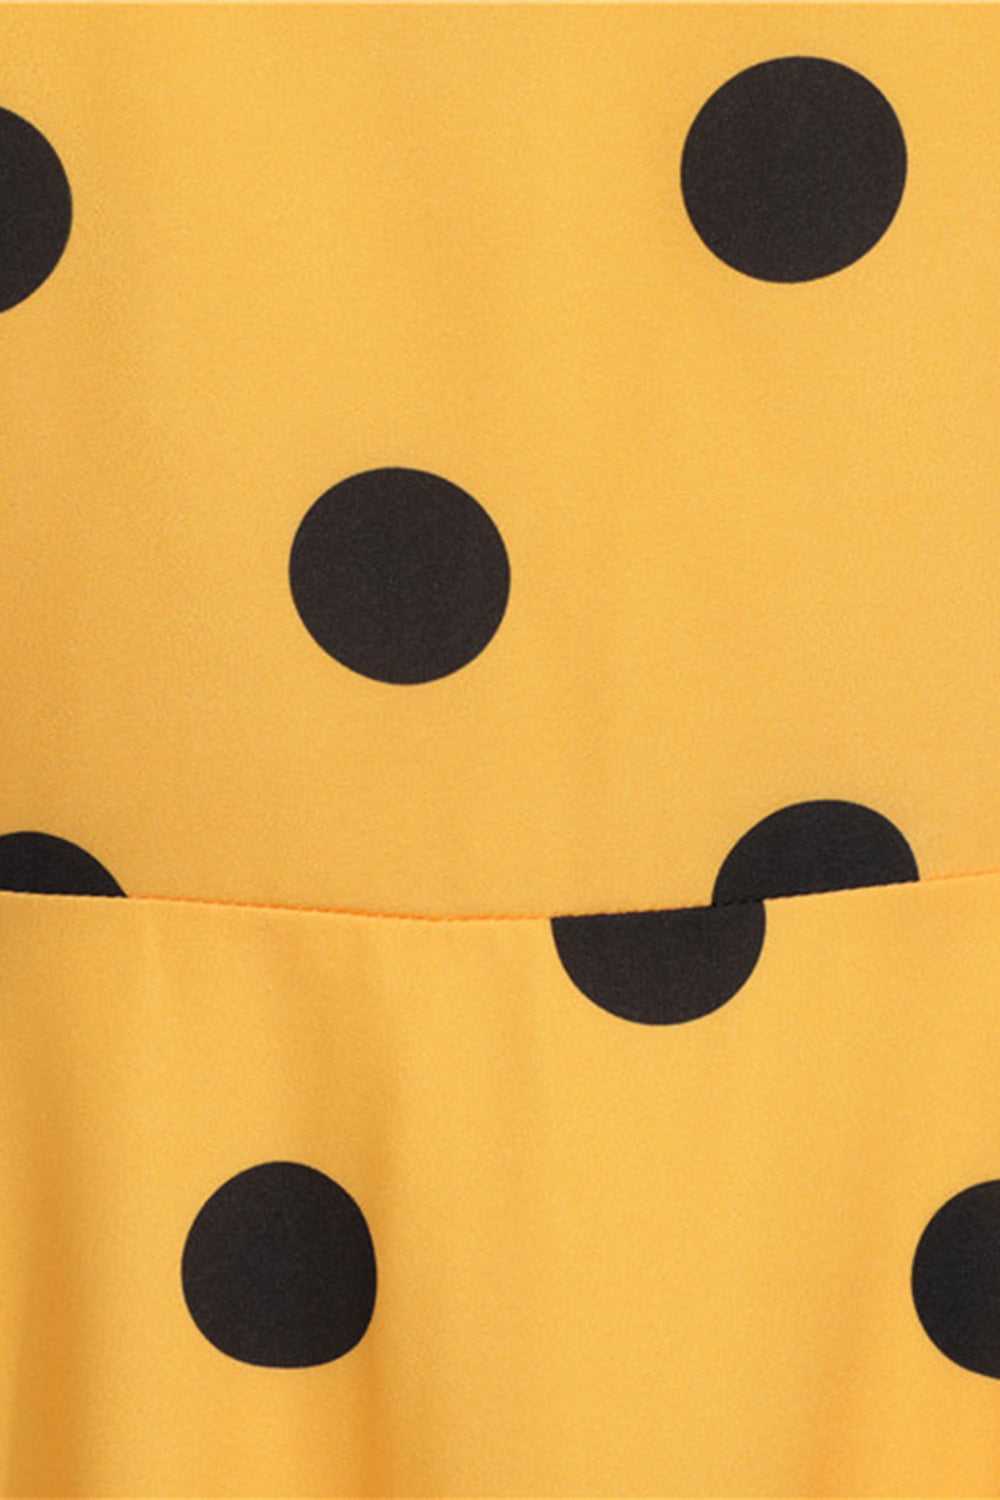 Polka Dots Yellow Vintage Dress with Short Sleeves